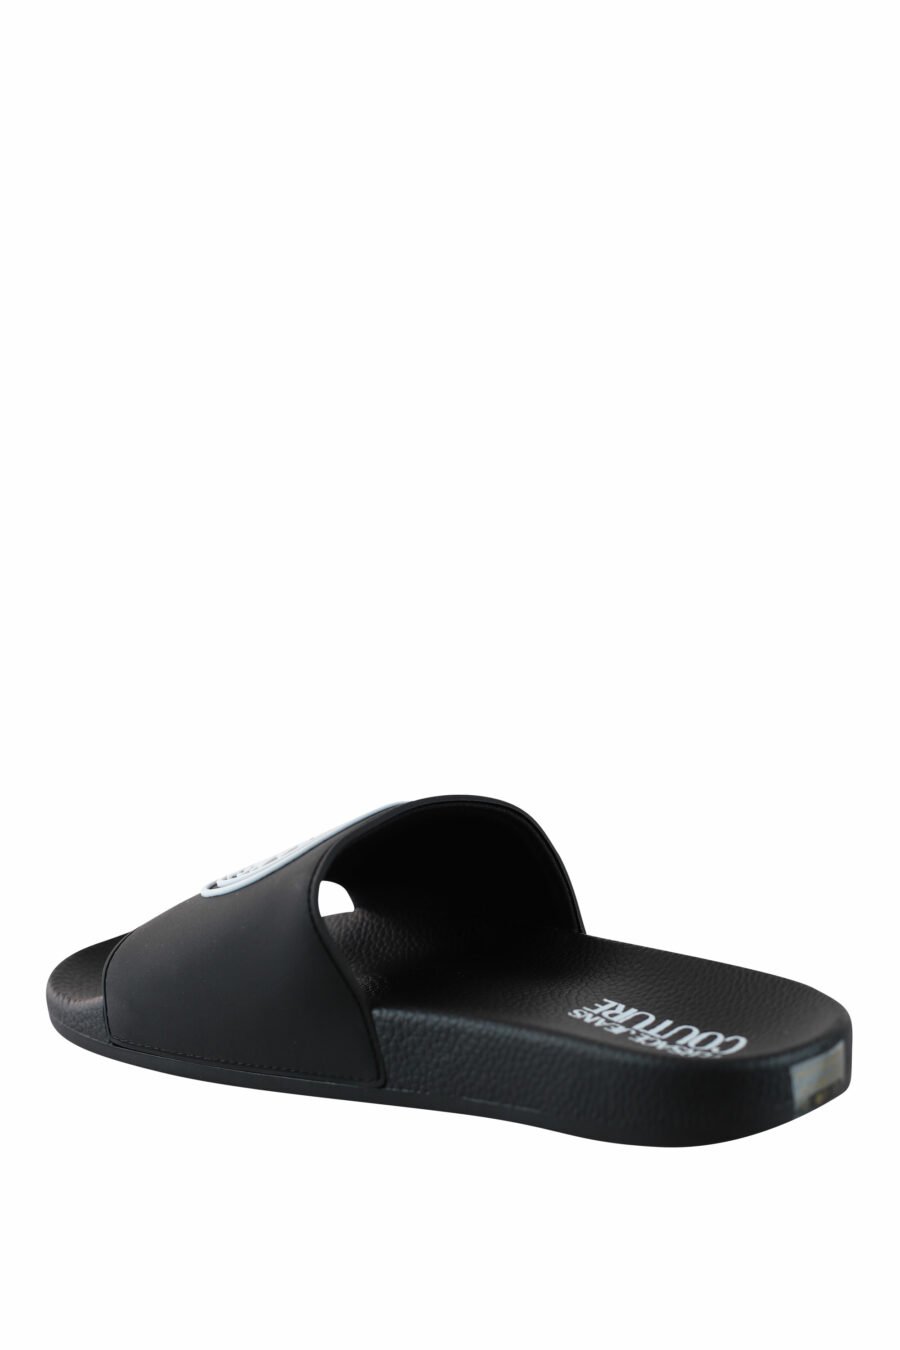 Schwarze Flip Flops mit schwarzem kreisförmigen Maxilogo - IMG 4428